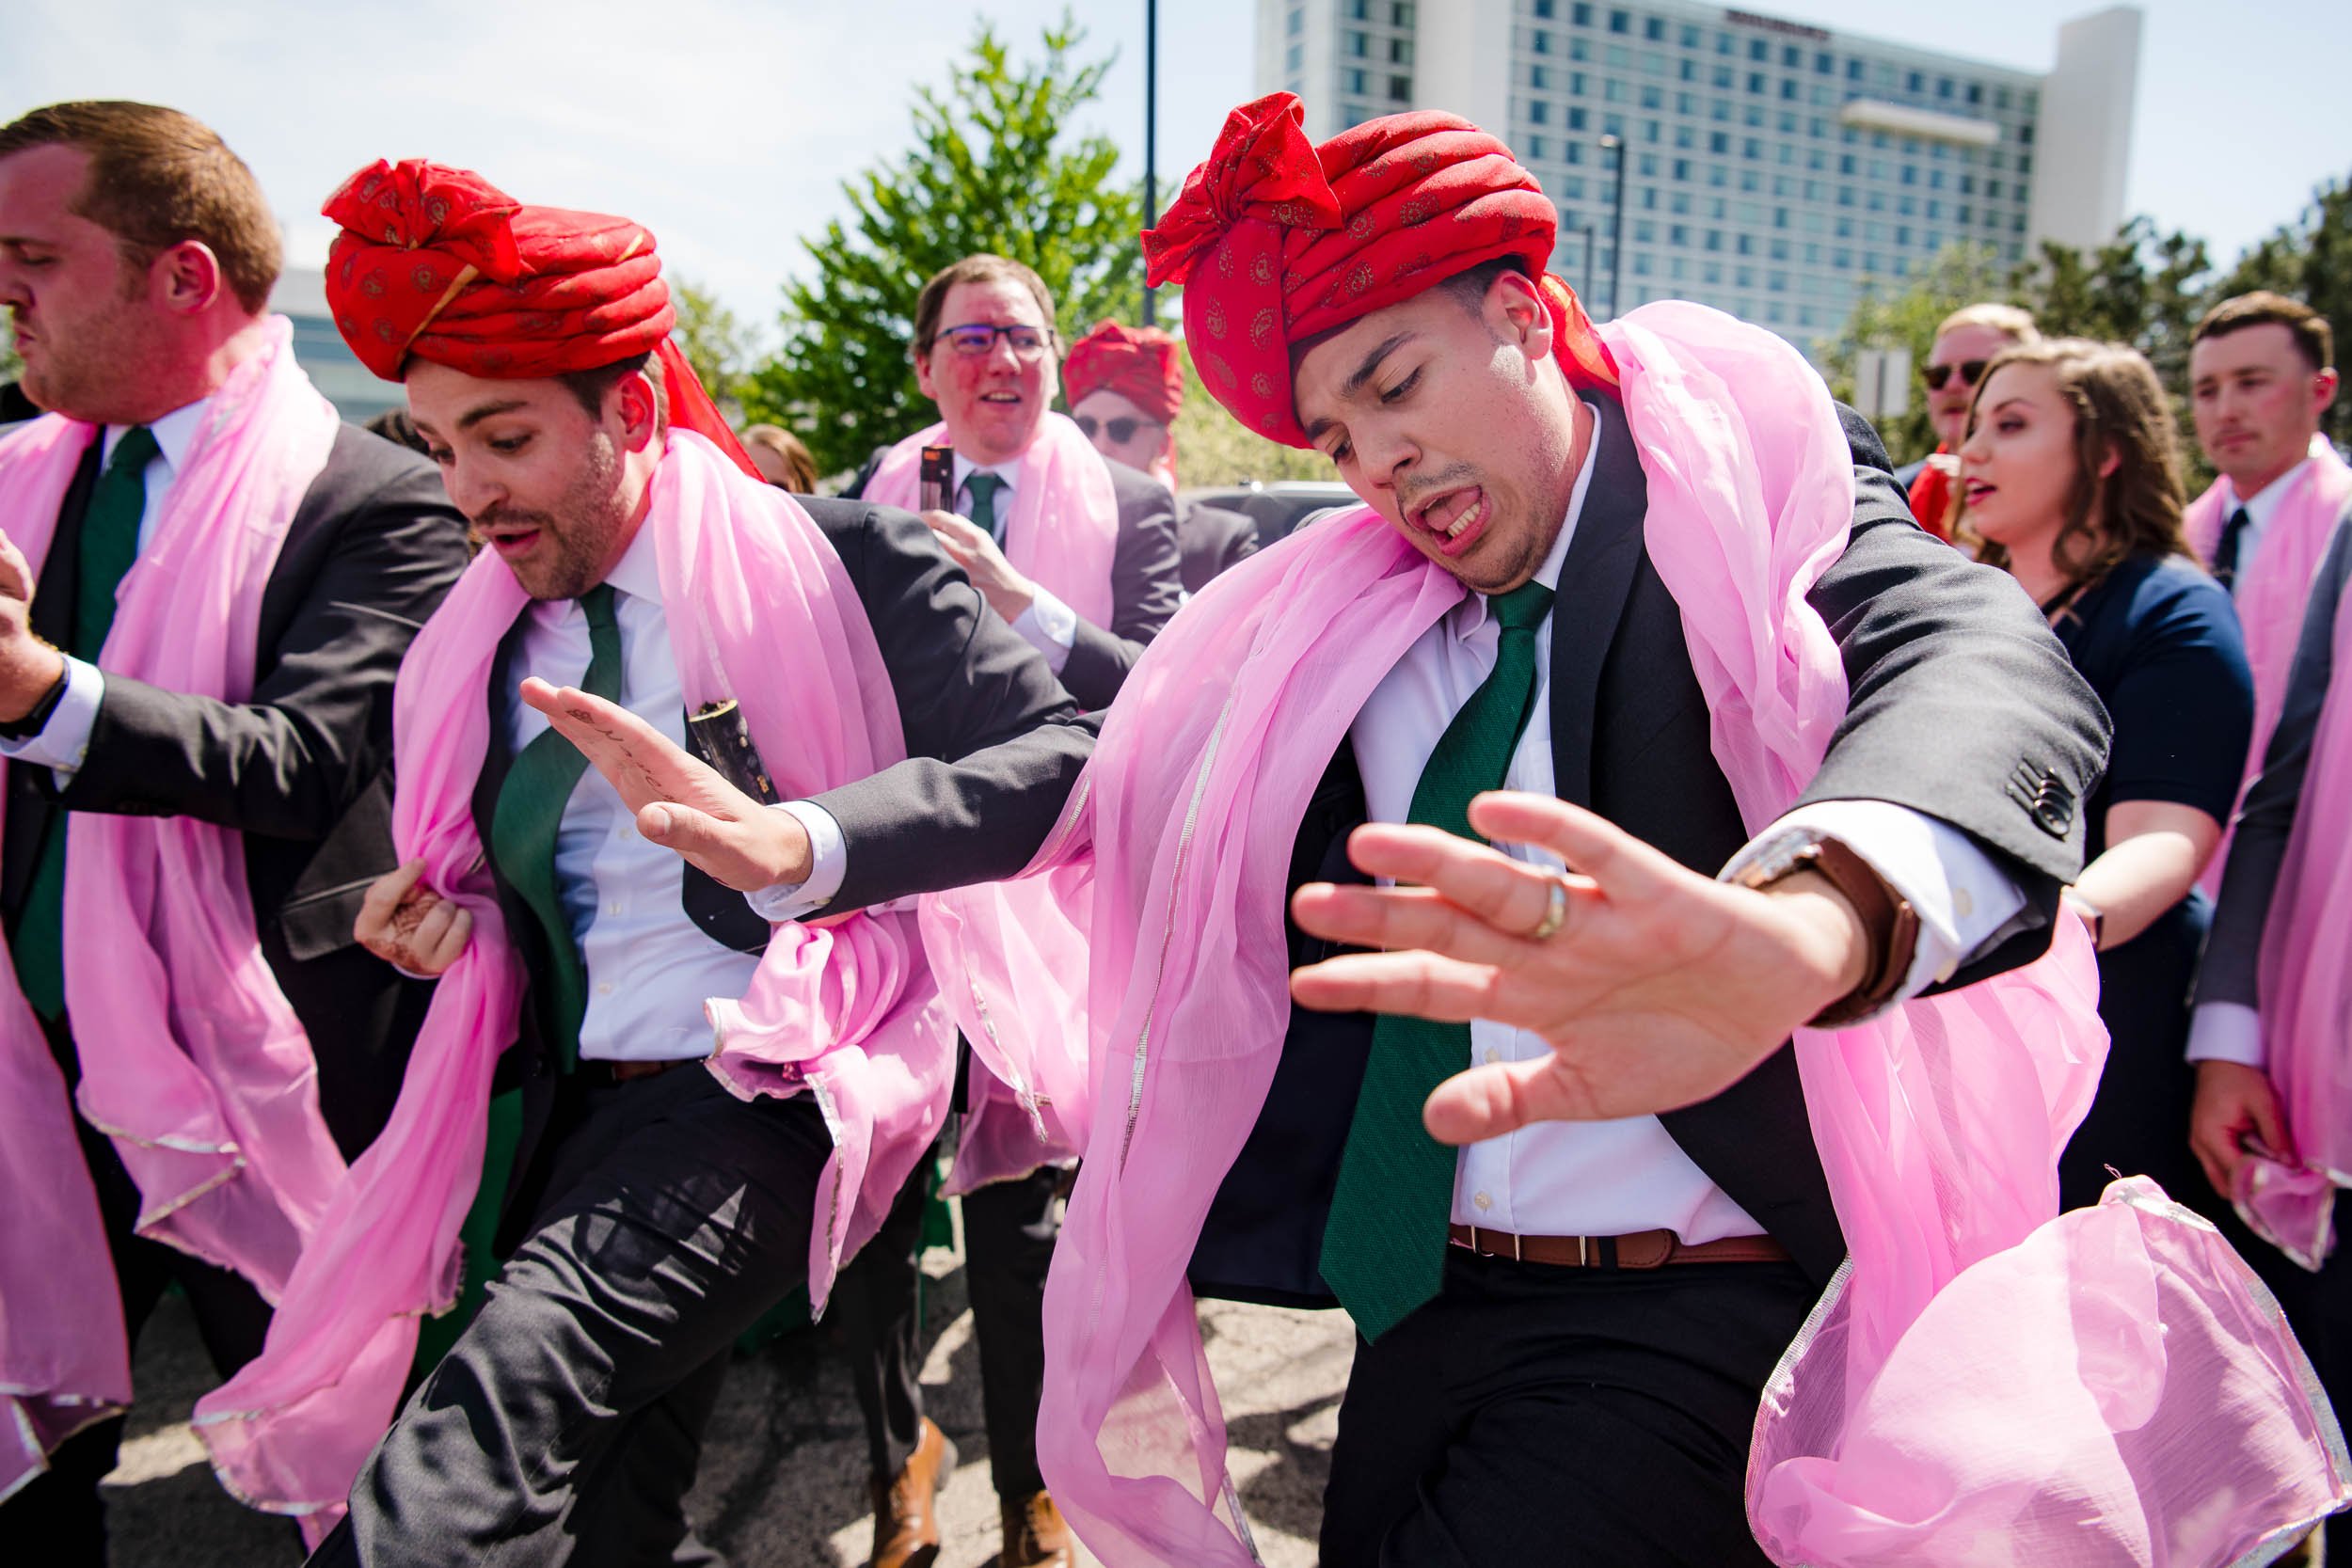 Chicago Wedding Photographer | Renaissance Schaumburg | J. Brown Photography | groomsmen dance during baraat ceremony.